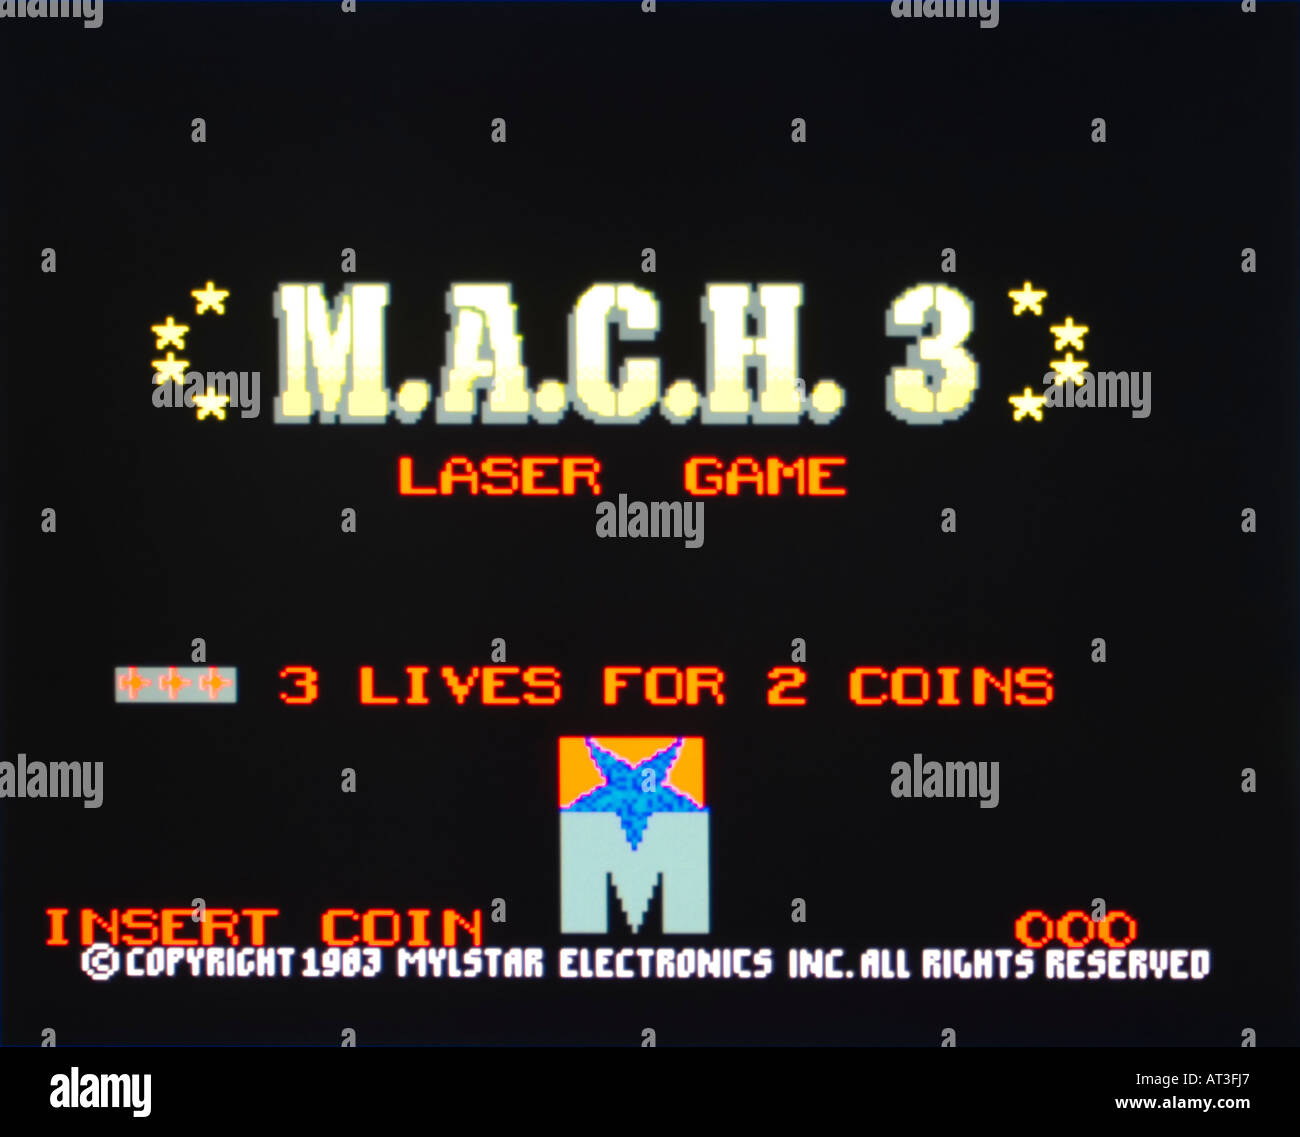 M A C H 3 MACH Mylstar Electronics Inc 1983 vintage videogioco arcade screenshot - solo uso editoriale Foto Stock